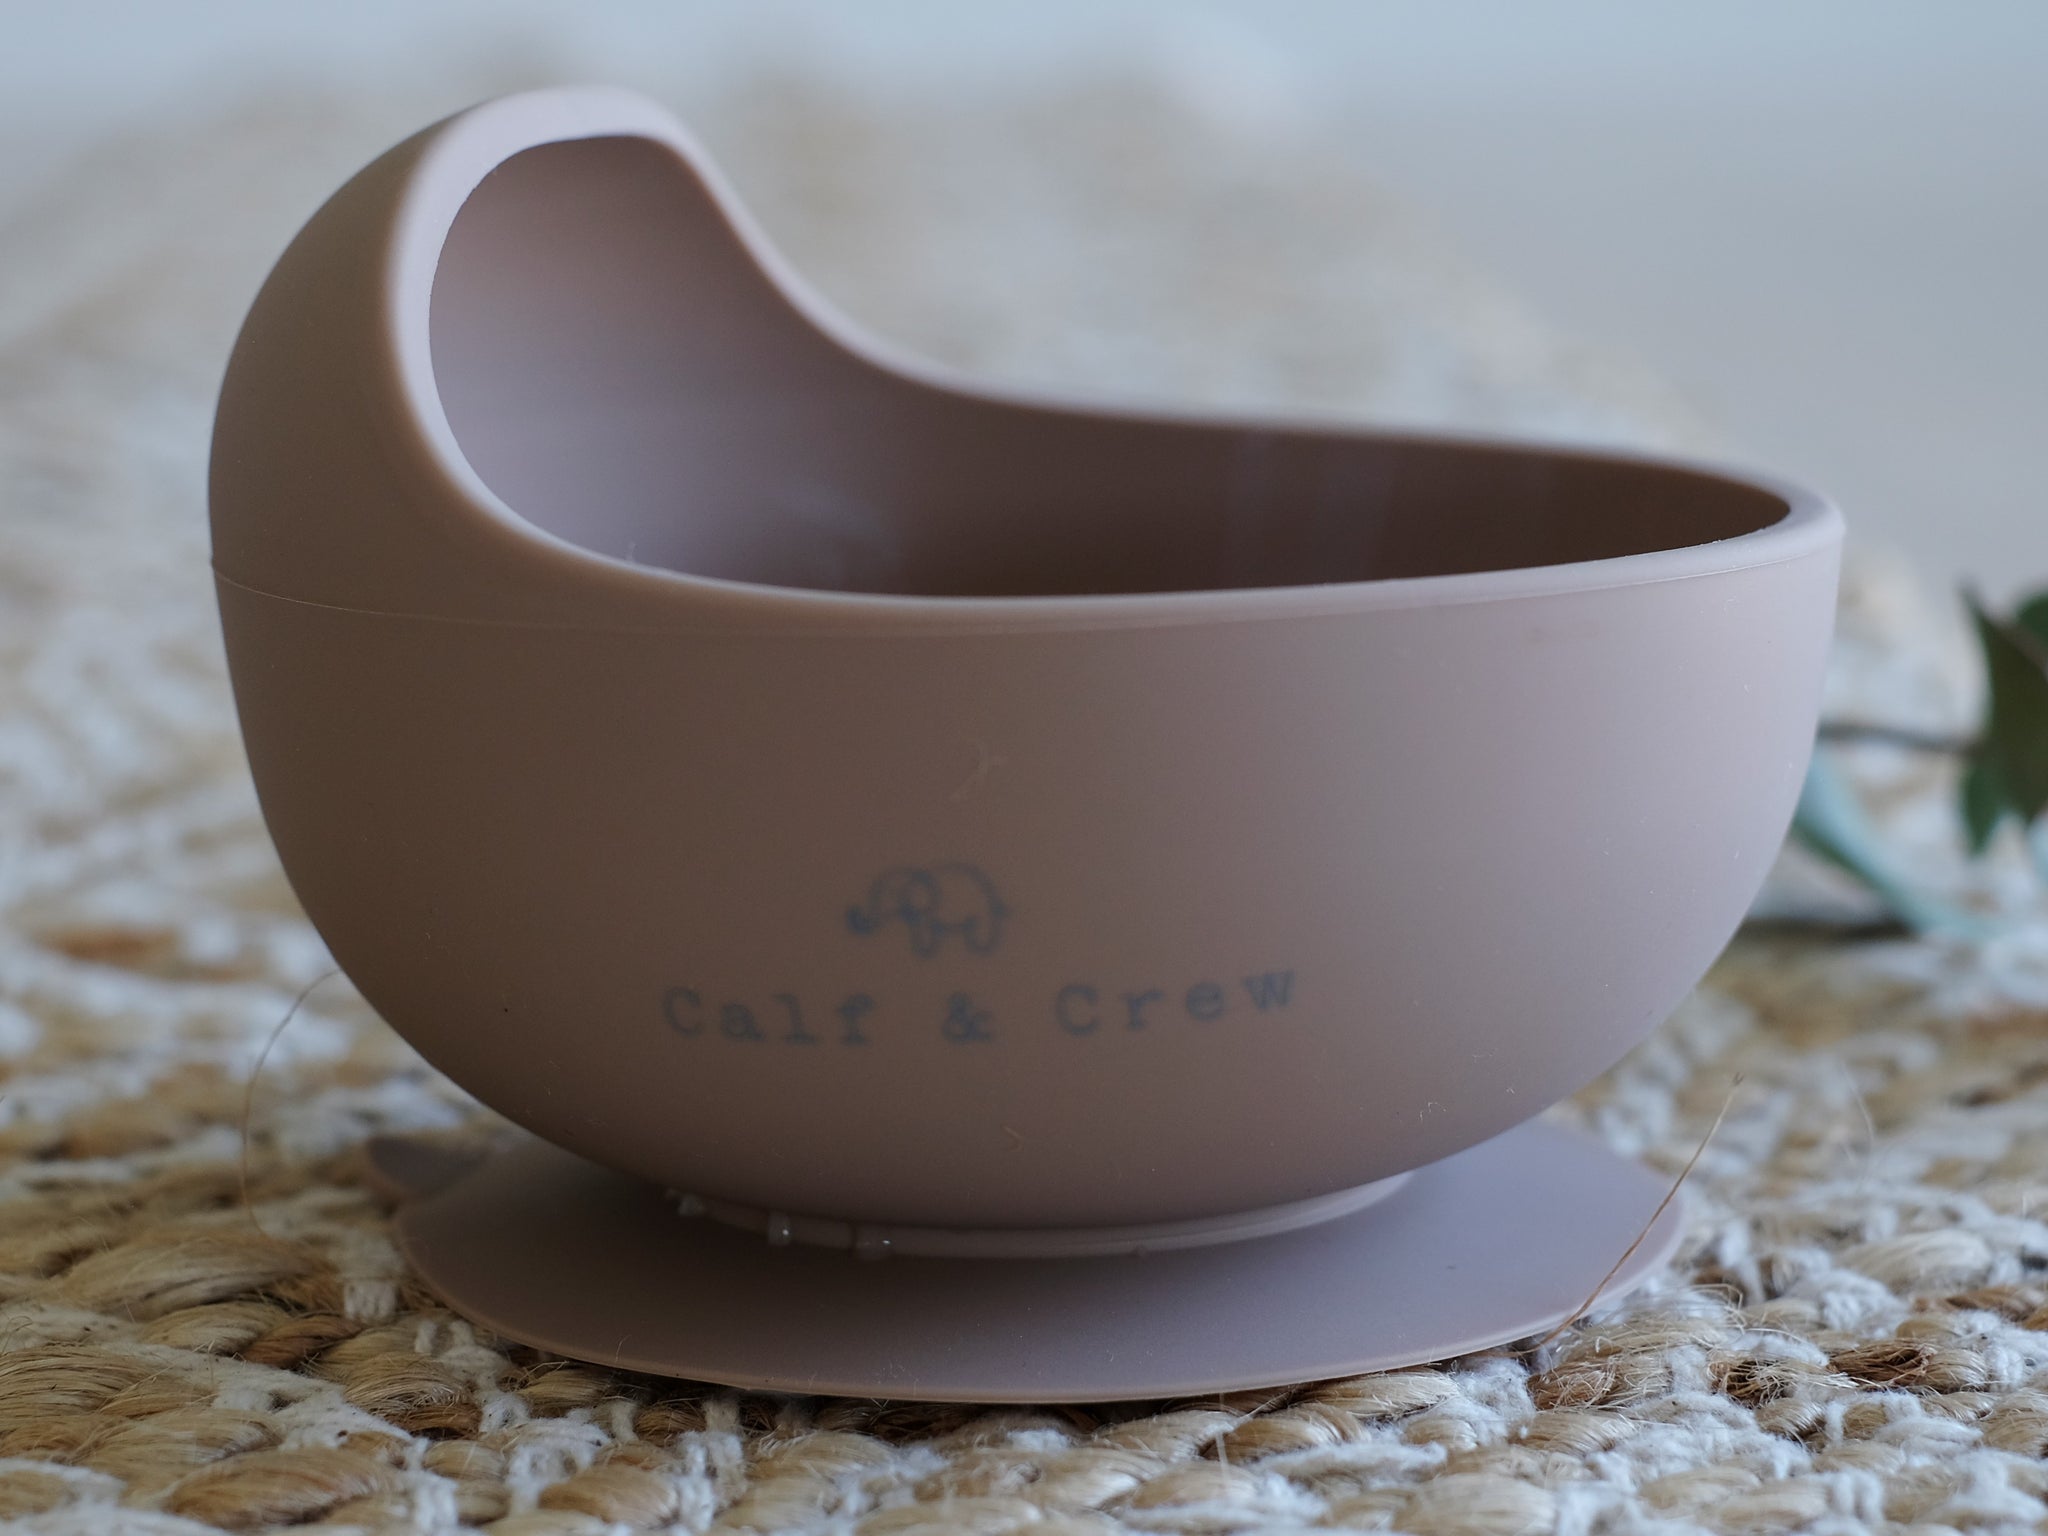 Calf & Crew - Silicone Suction Bowl & Beechwood Spoon